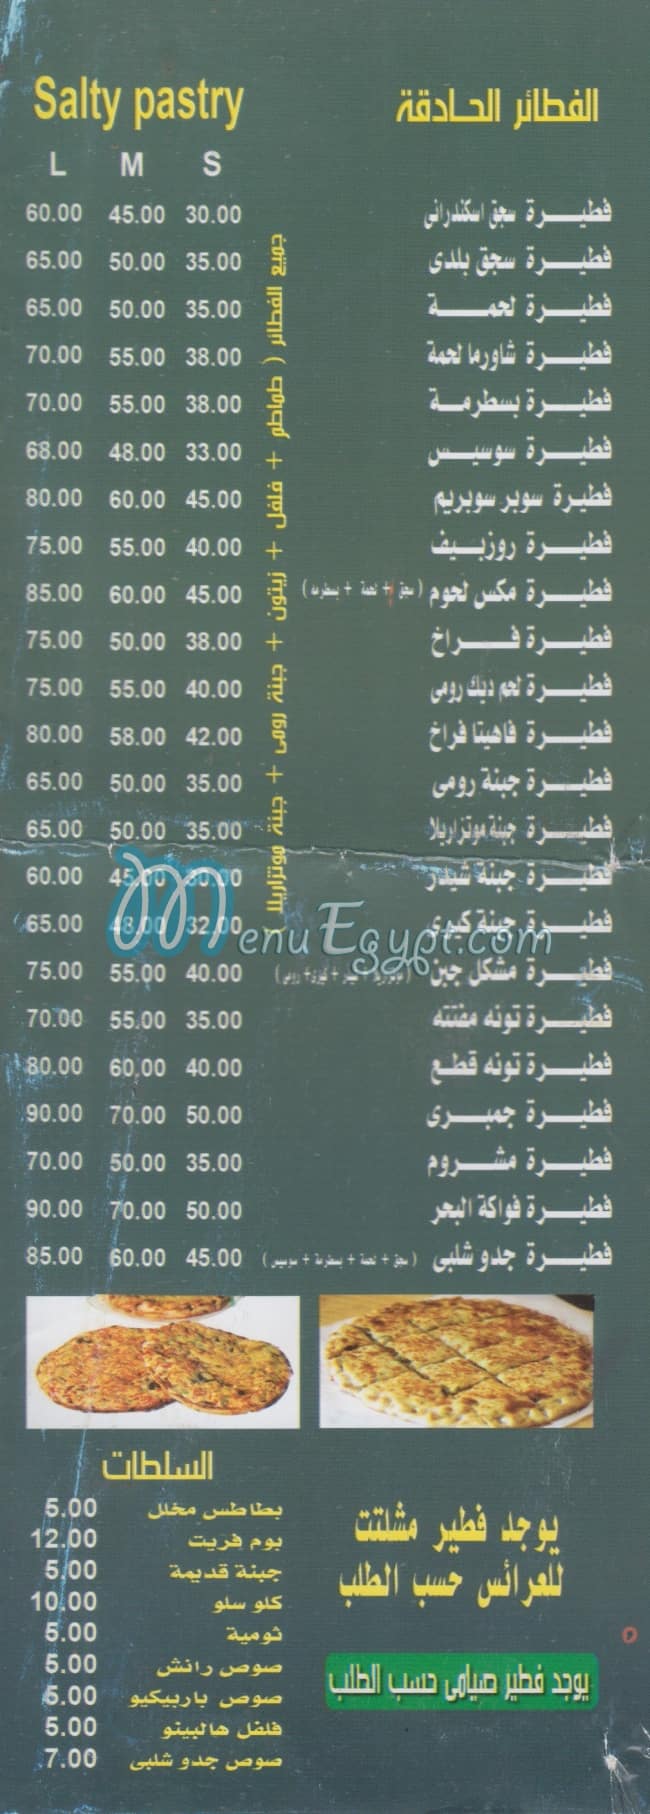 Gedo Shalaby menu Egypt 1